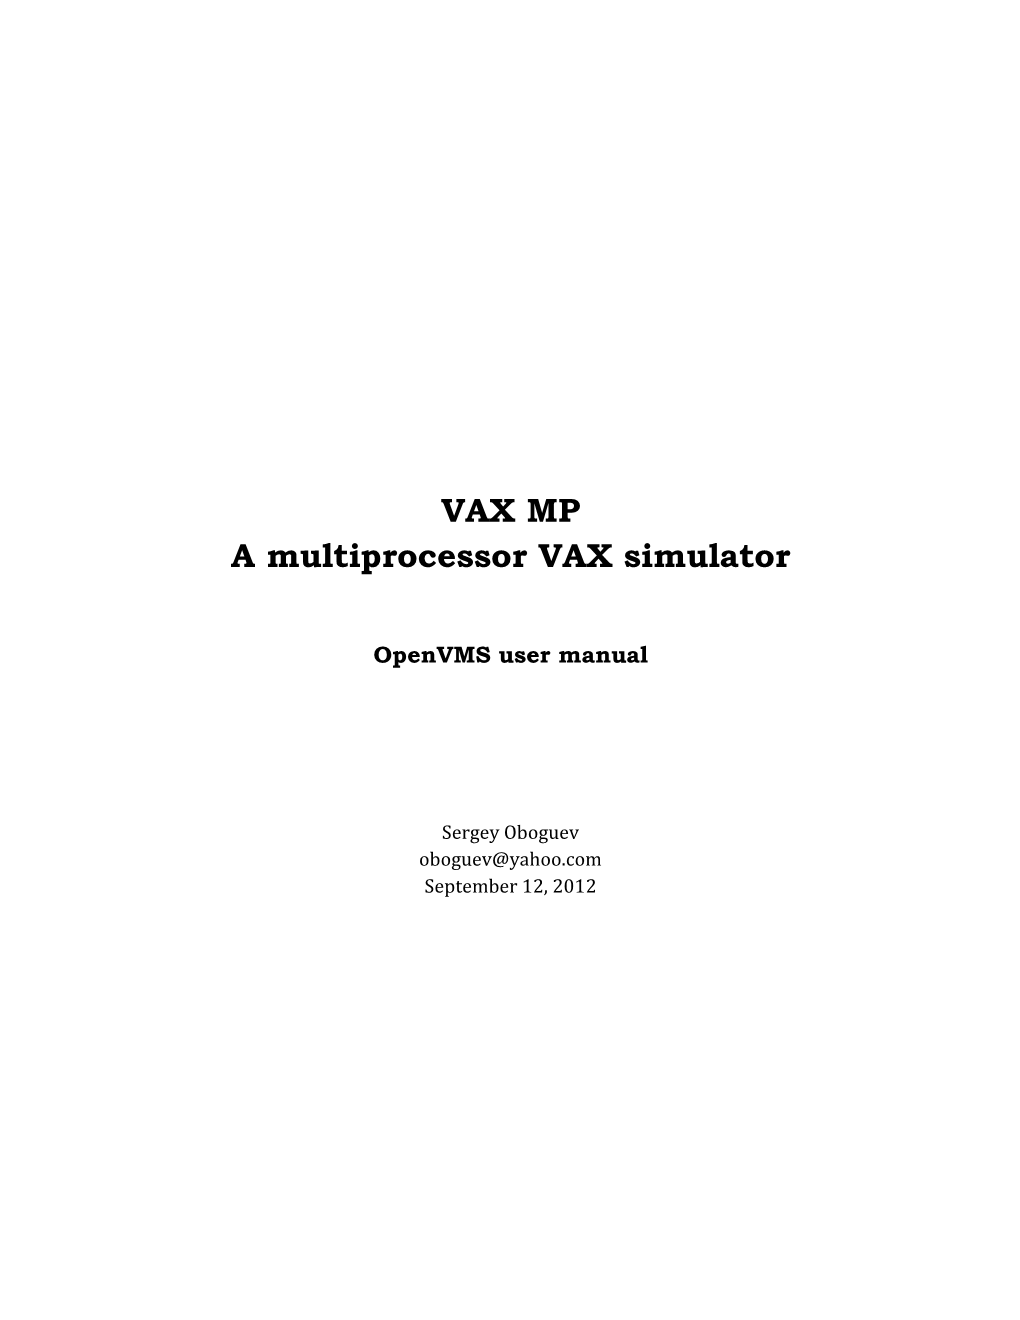 VAX MP a Multiprocessor VAX Simulator